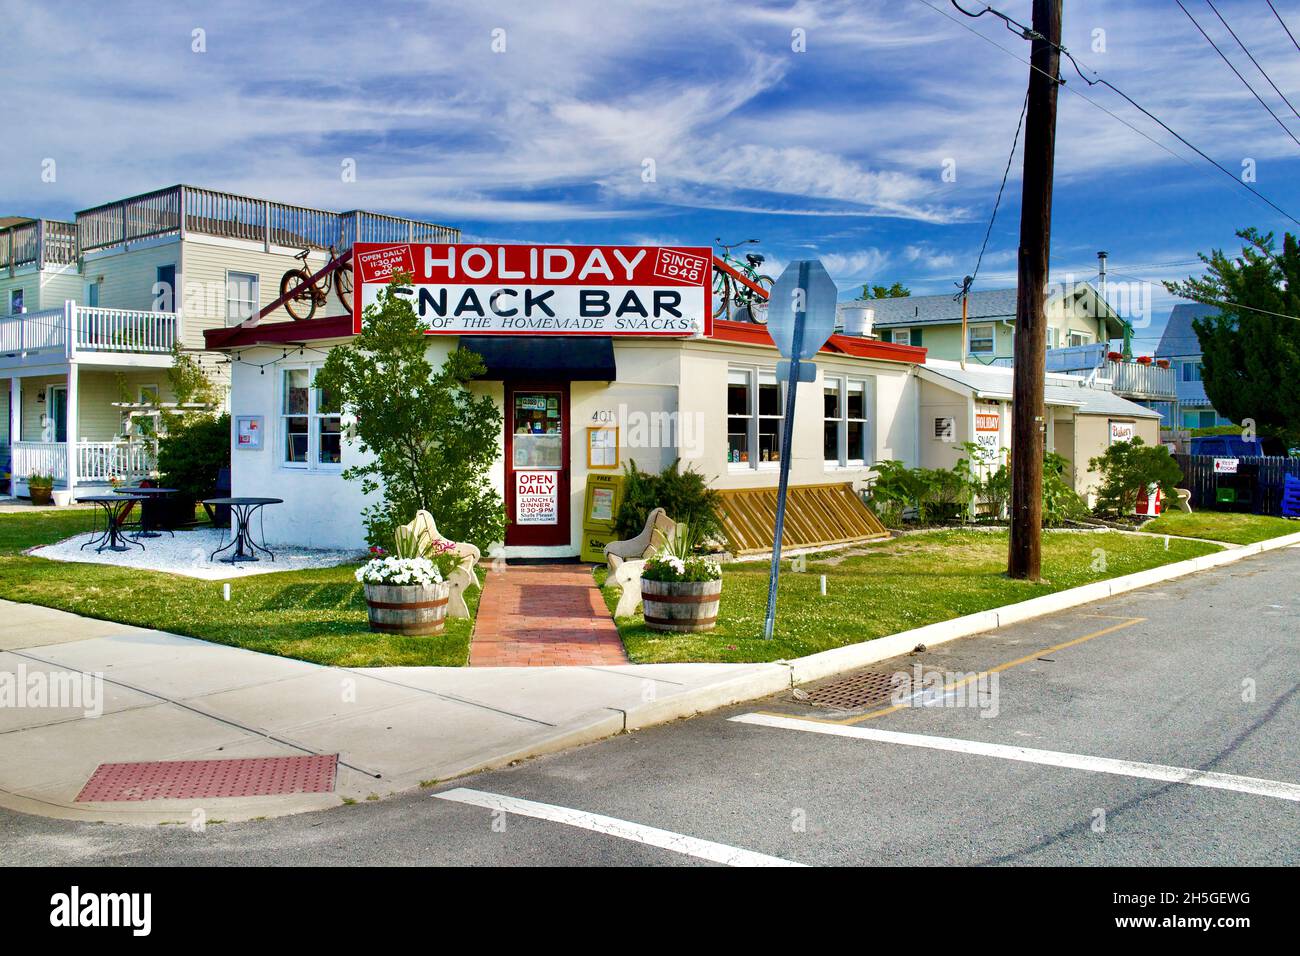 Holiday Snack Bar on Long Beach Island, NJ, USA  Classic beach restaurant with home made cakes, slam burgers, and milk shakes Stock Photo